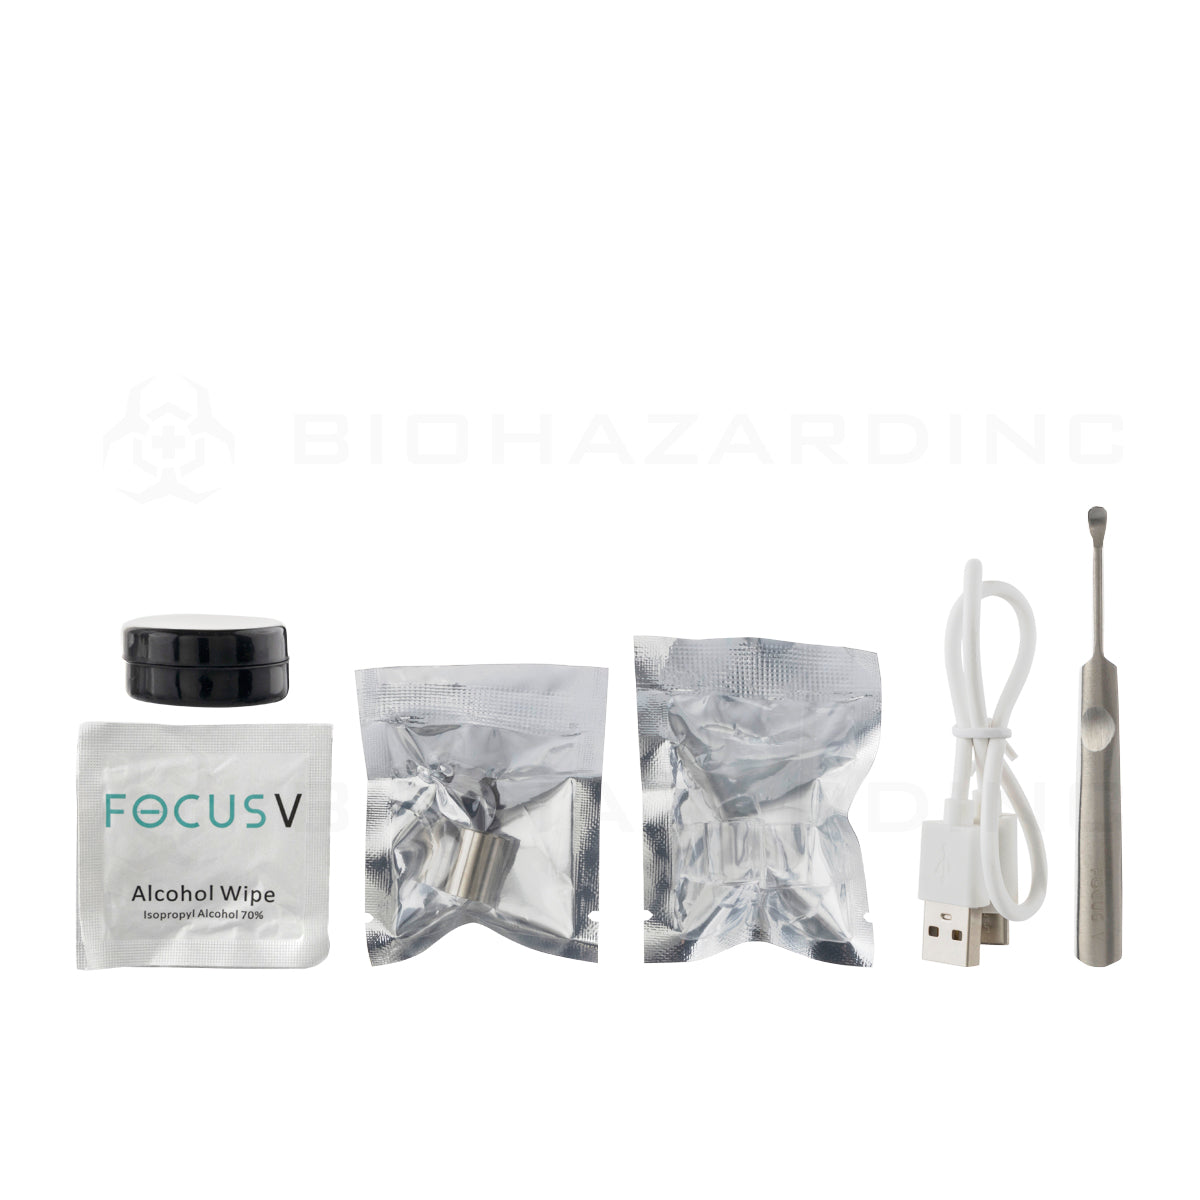 Focus V | CARTA Portable E-Rig Vaporizer Biohazard Inc   